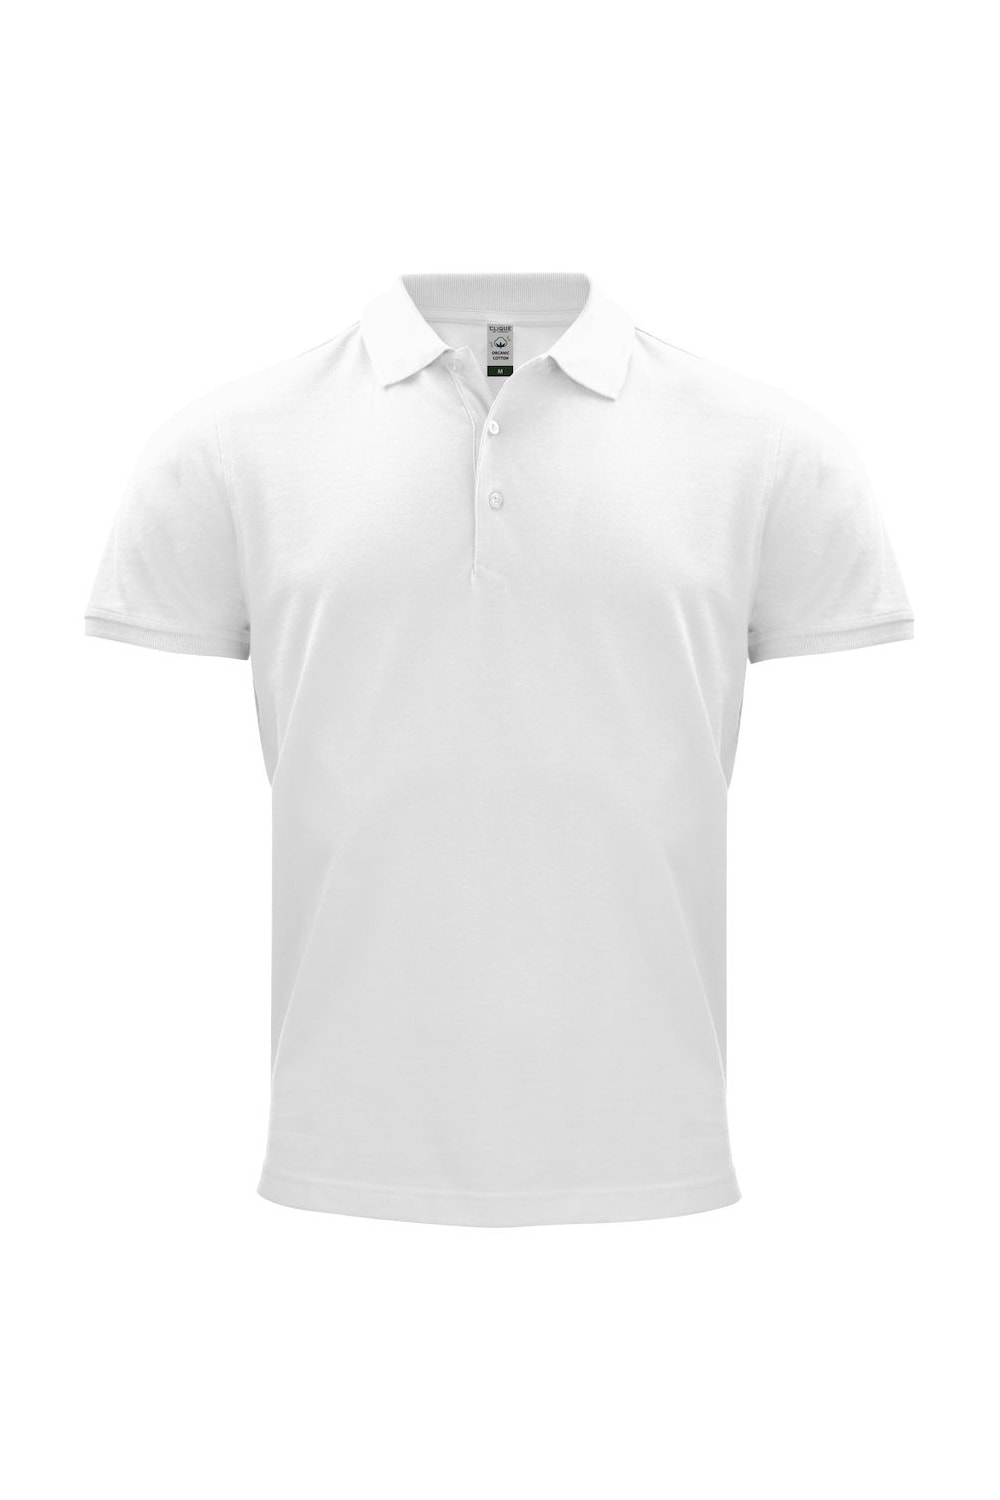 Mens Classic Polo T-Shirt - White